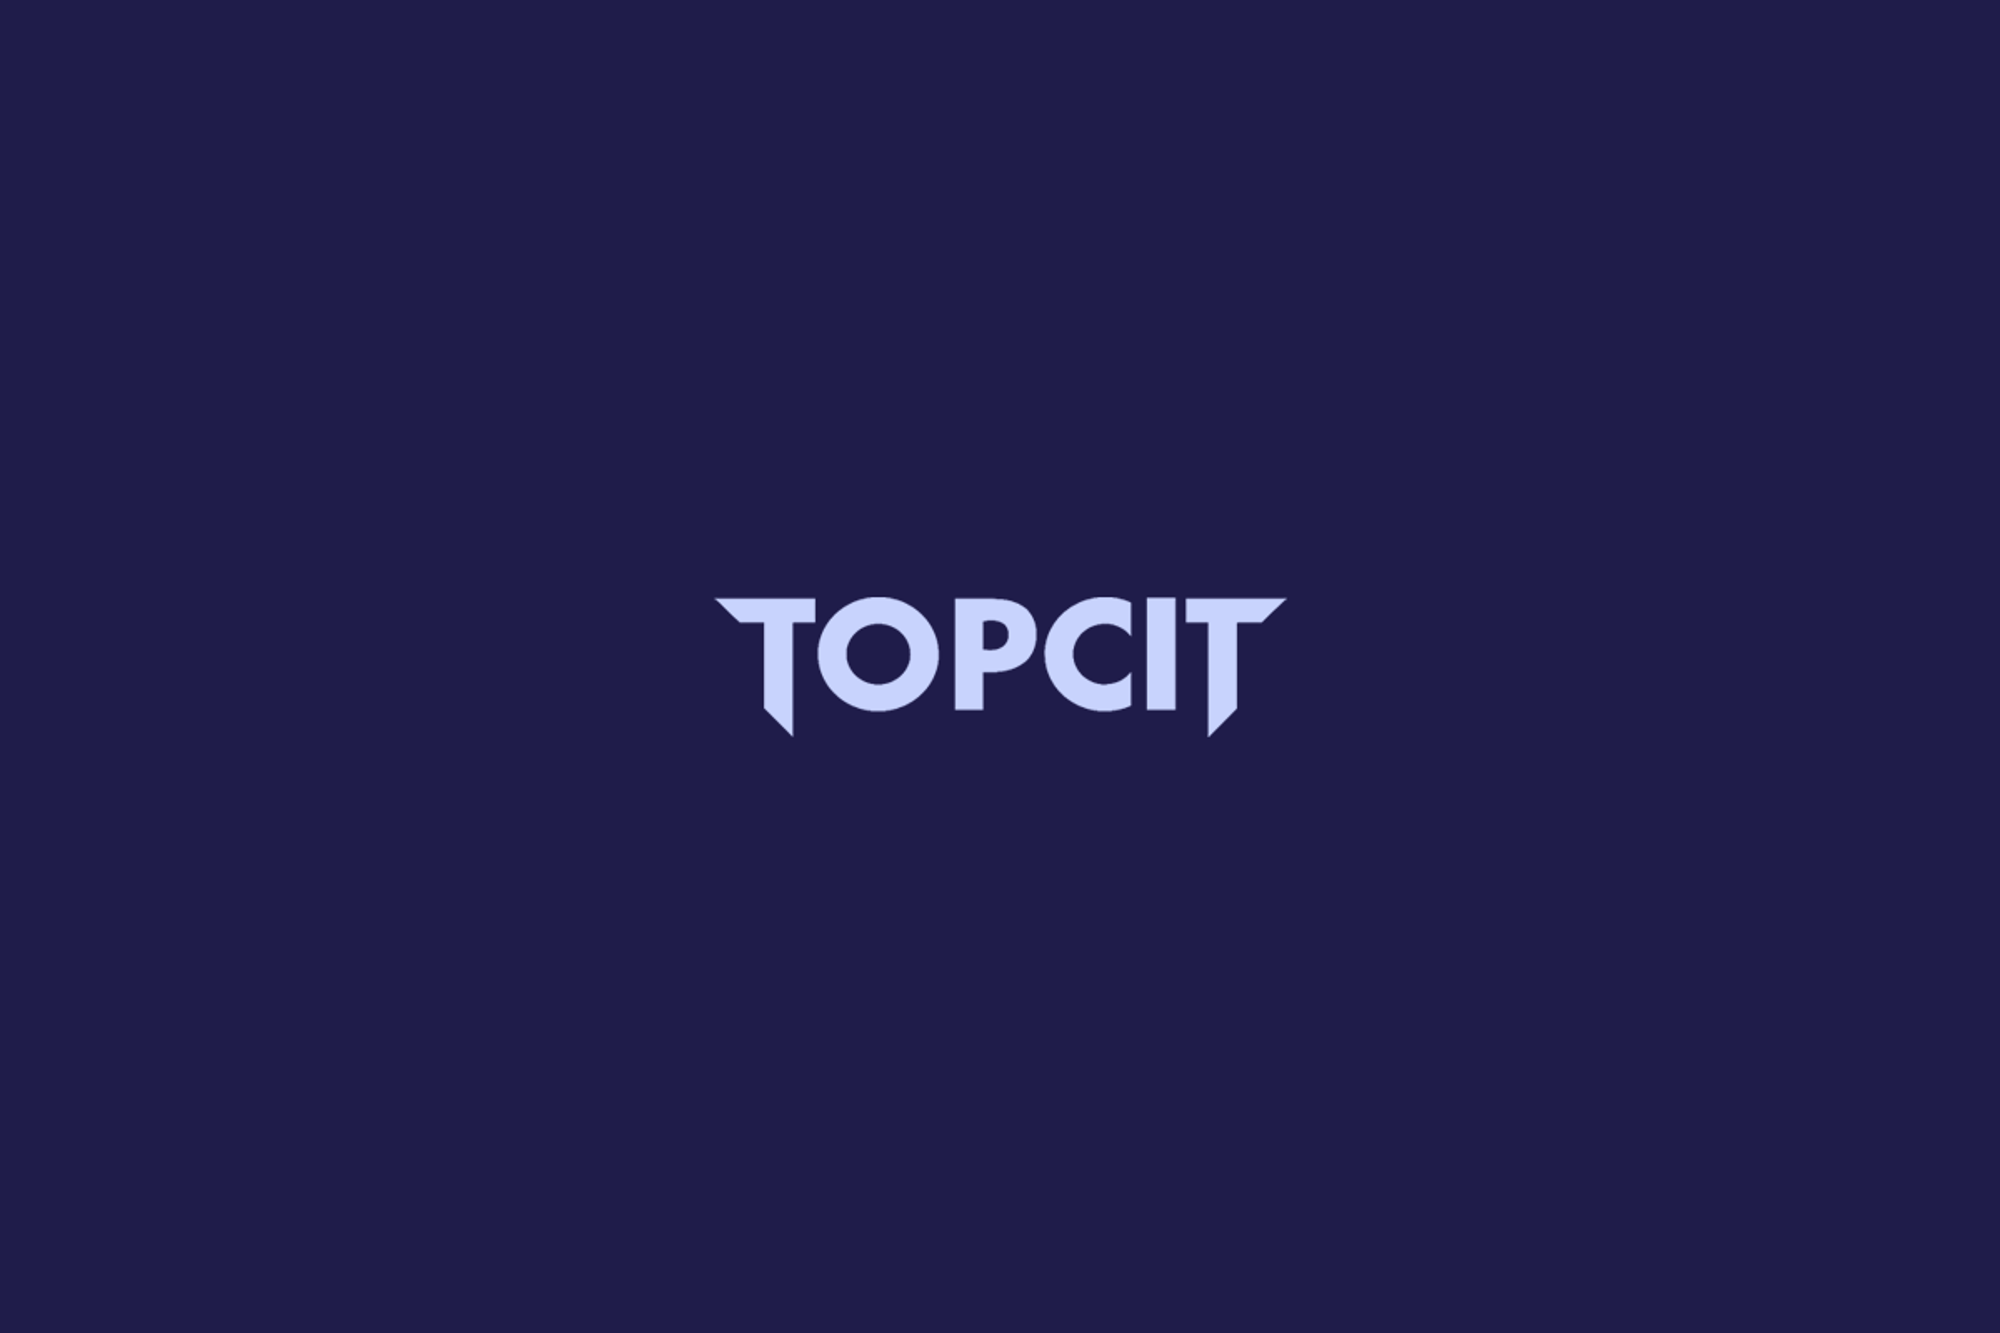 TOPCIT 요약정리 - 4. 정보 보안